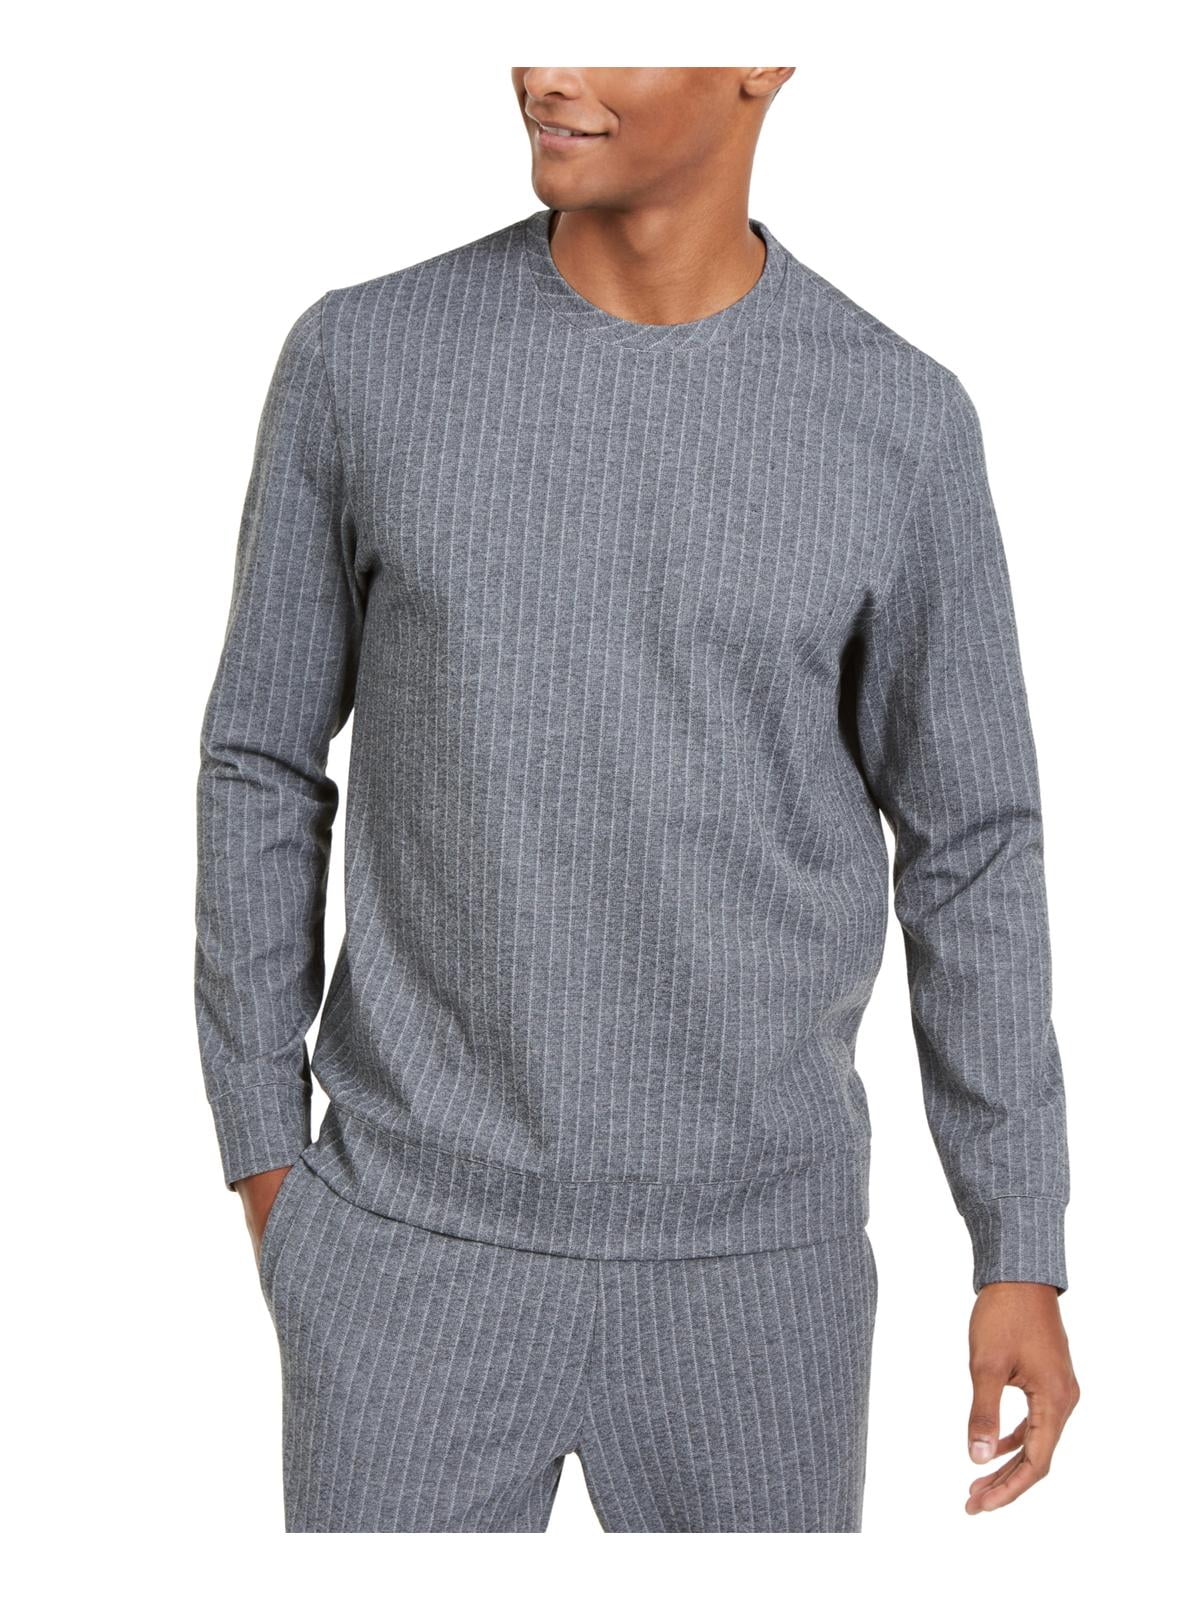 Buy > alfani sweater mens > in stock